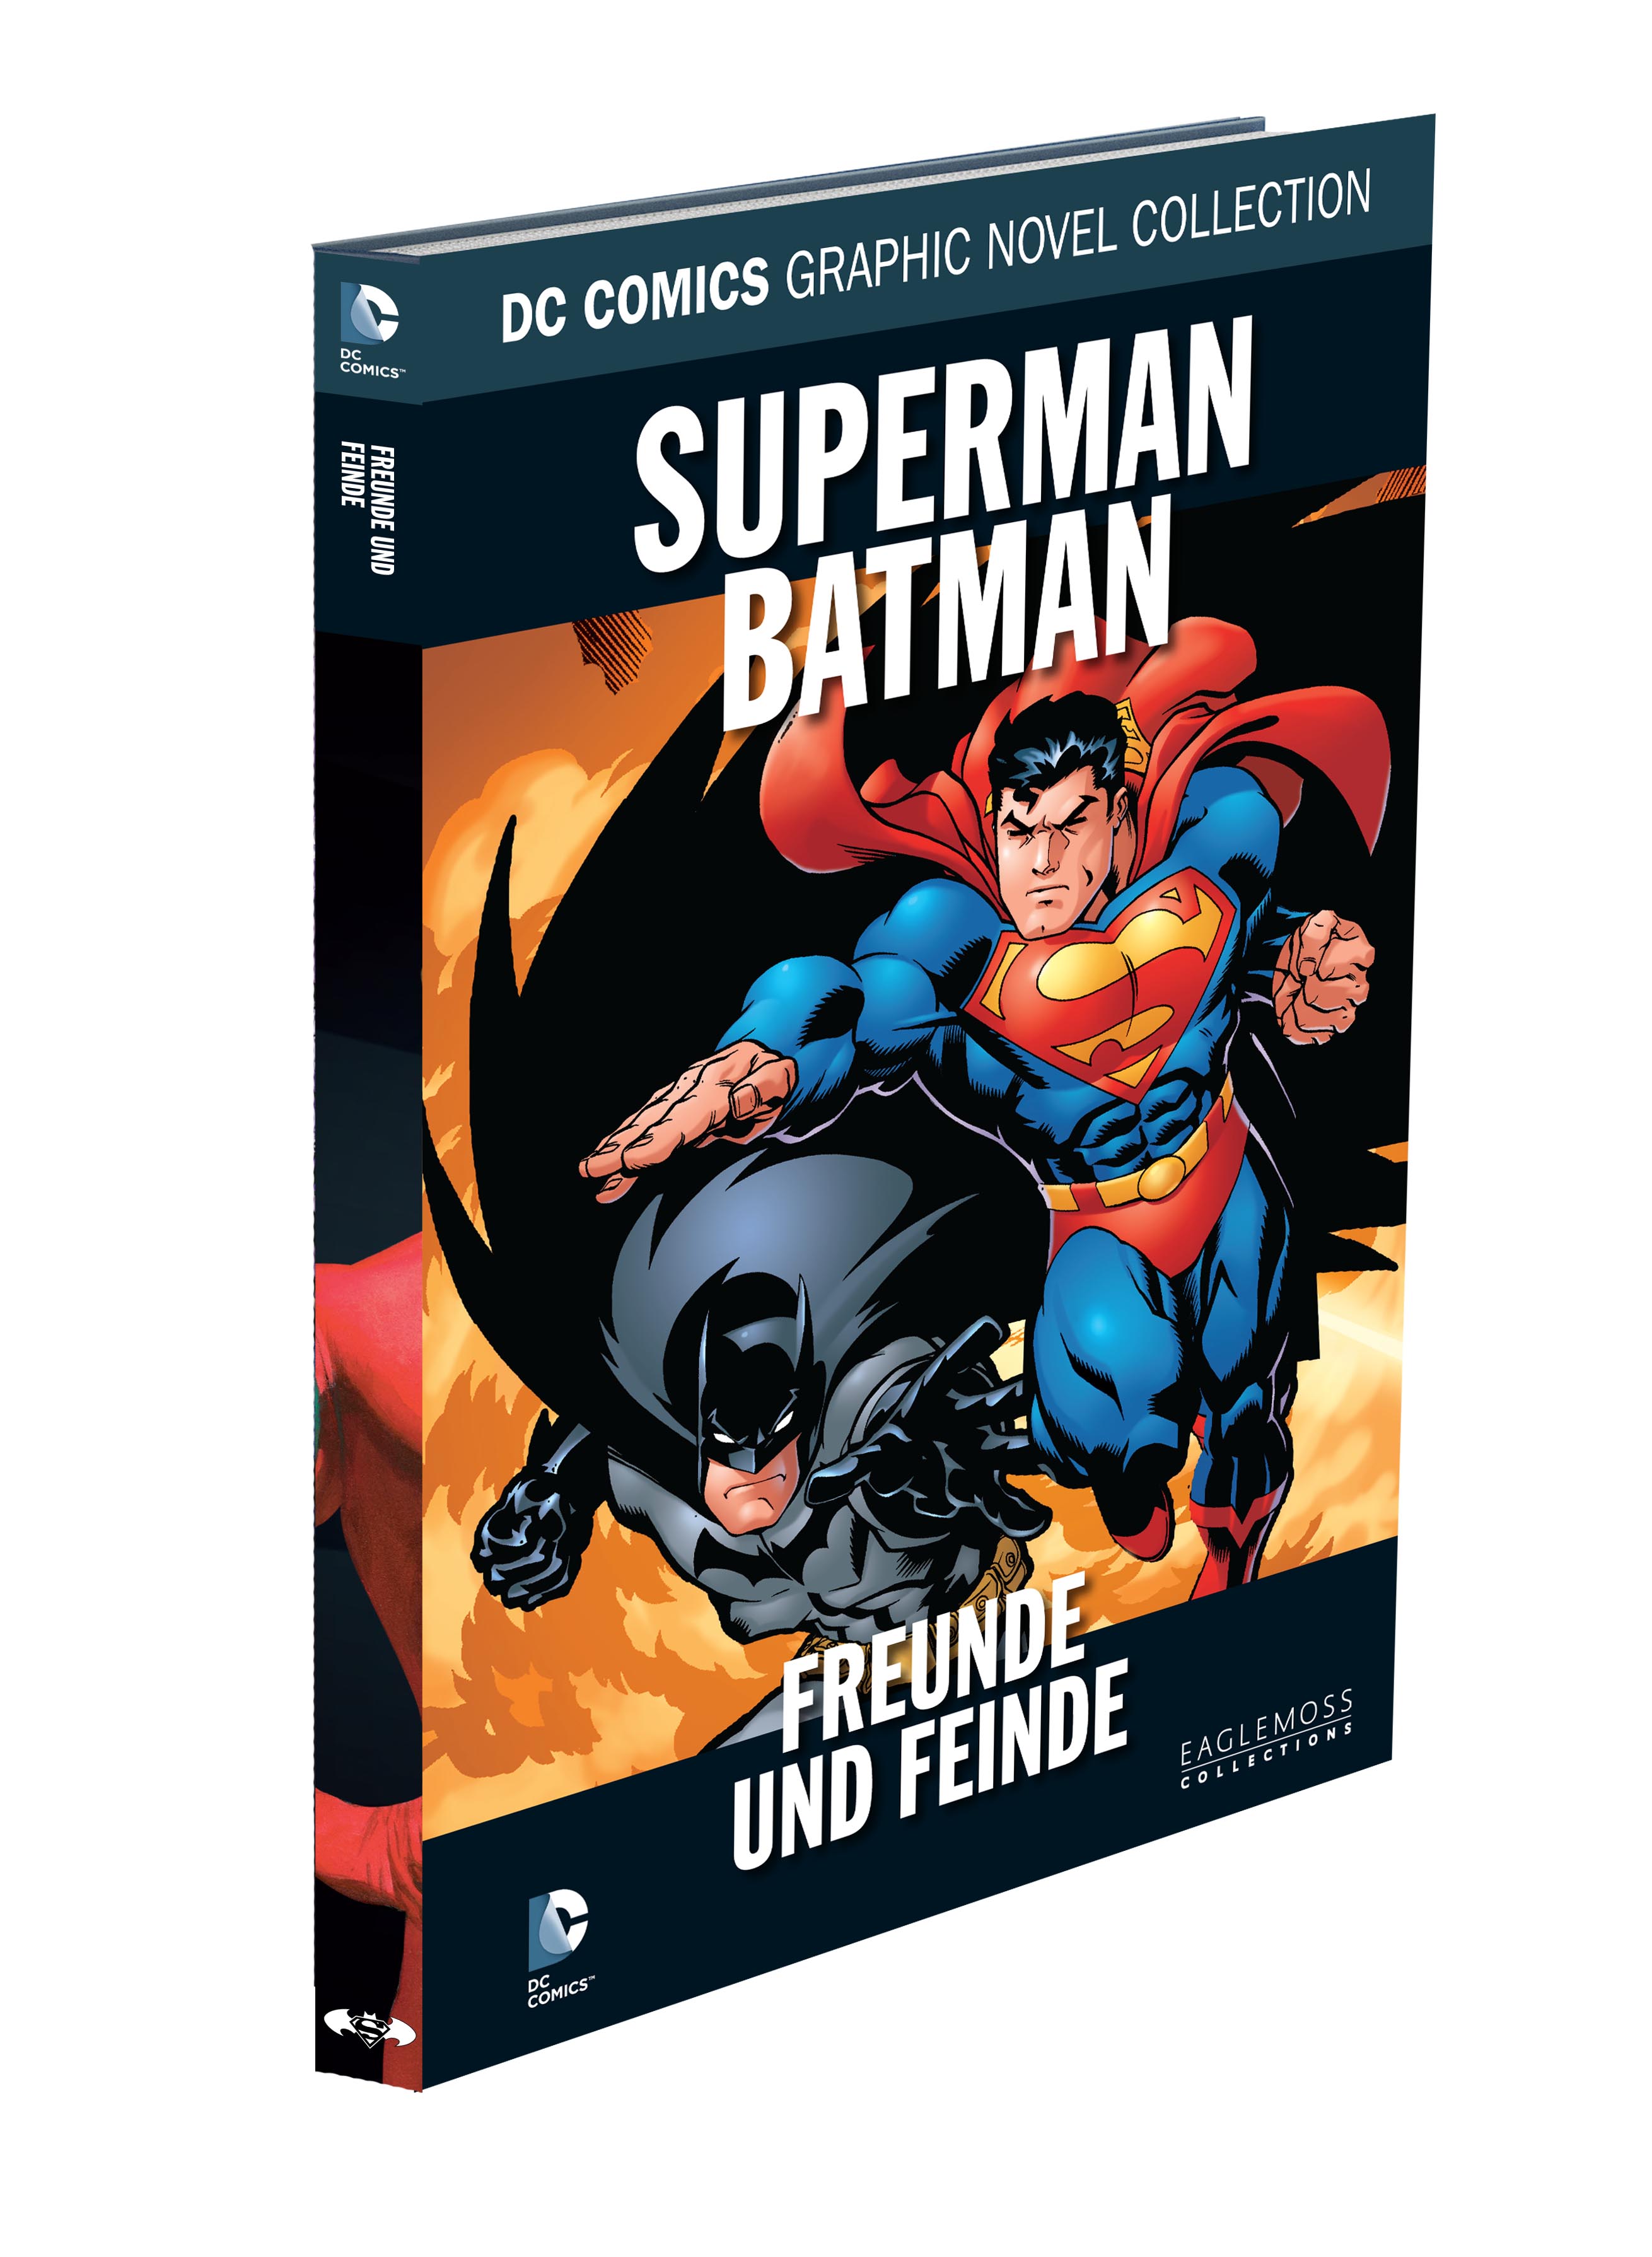 DC Comics Graphic Novel Collection Superman/Batman - Freunde und Feinde